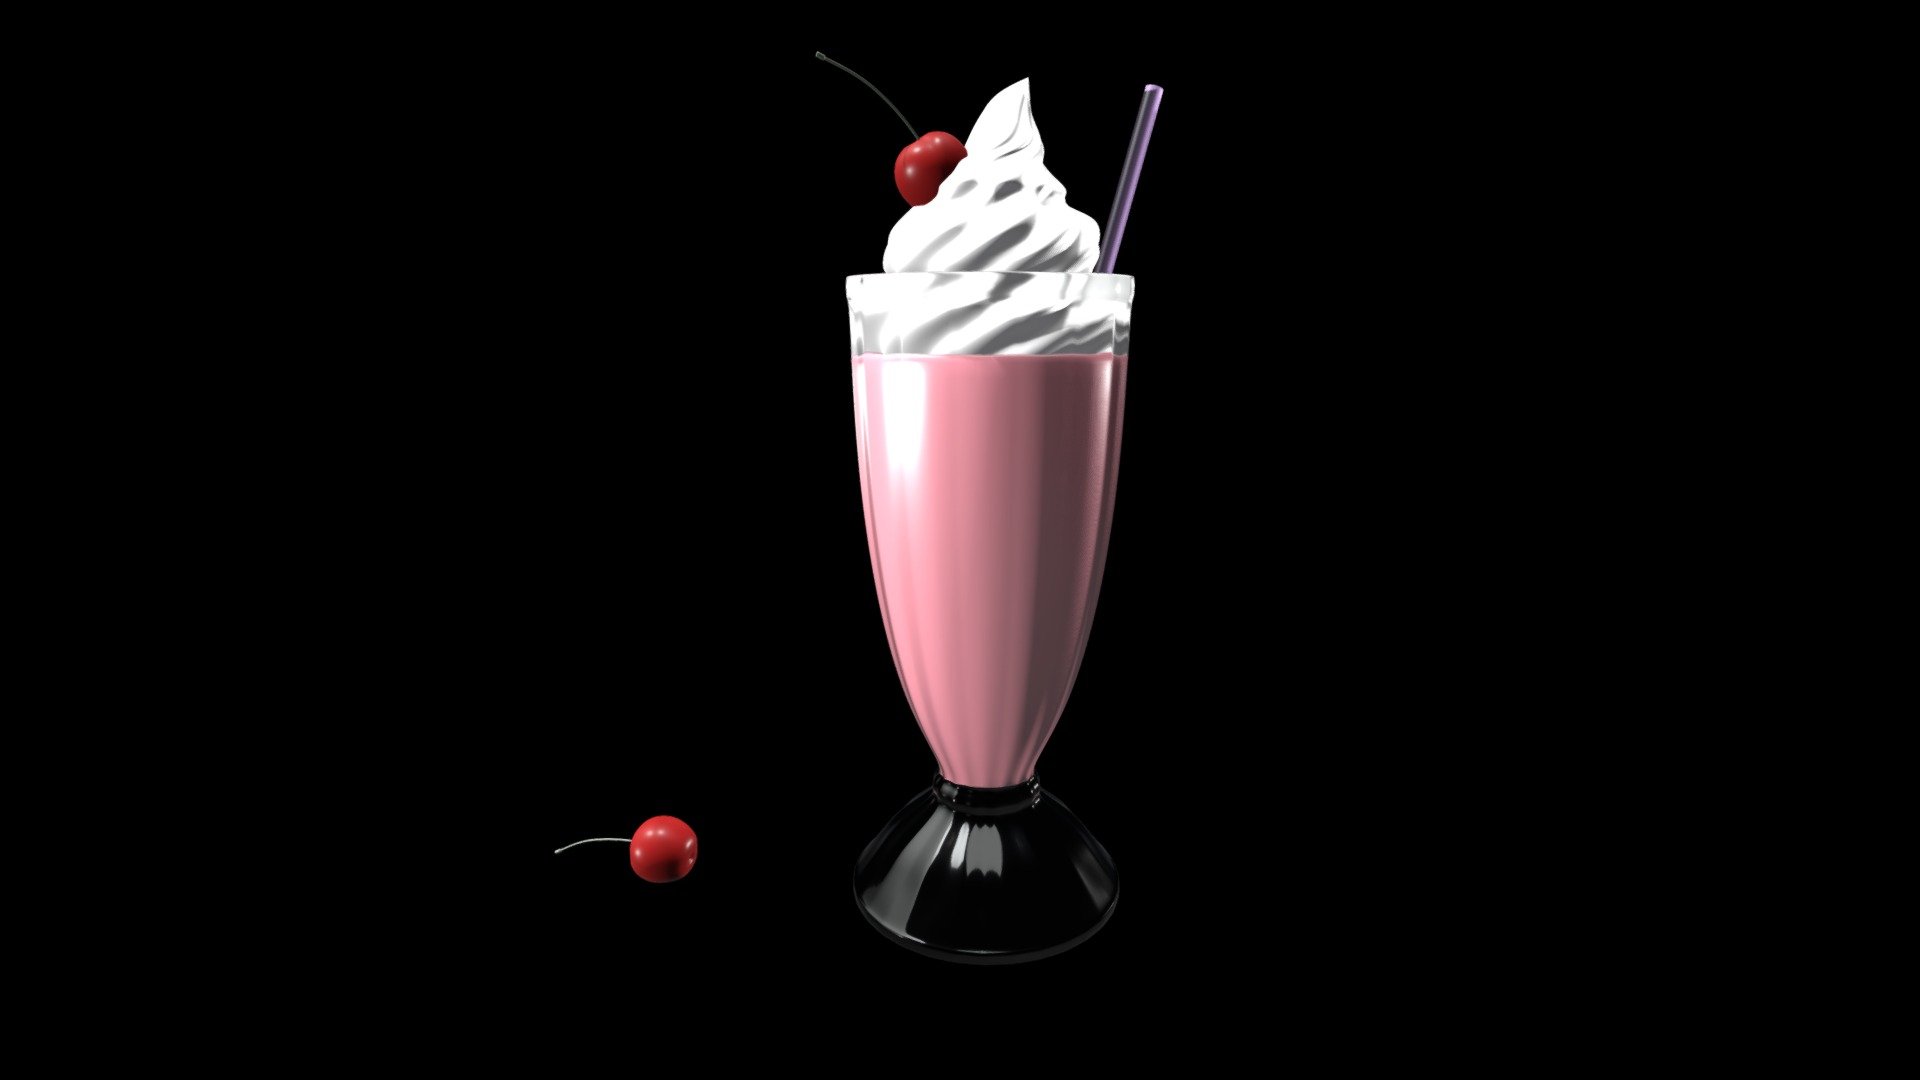 A nice detailed 3D model of a pink milkshake with a cherry - Milkshake - 3D model by MadisonDagenais 3d model